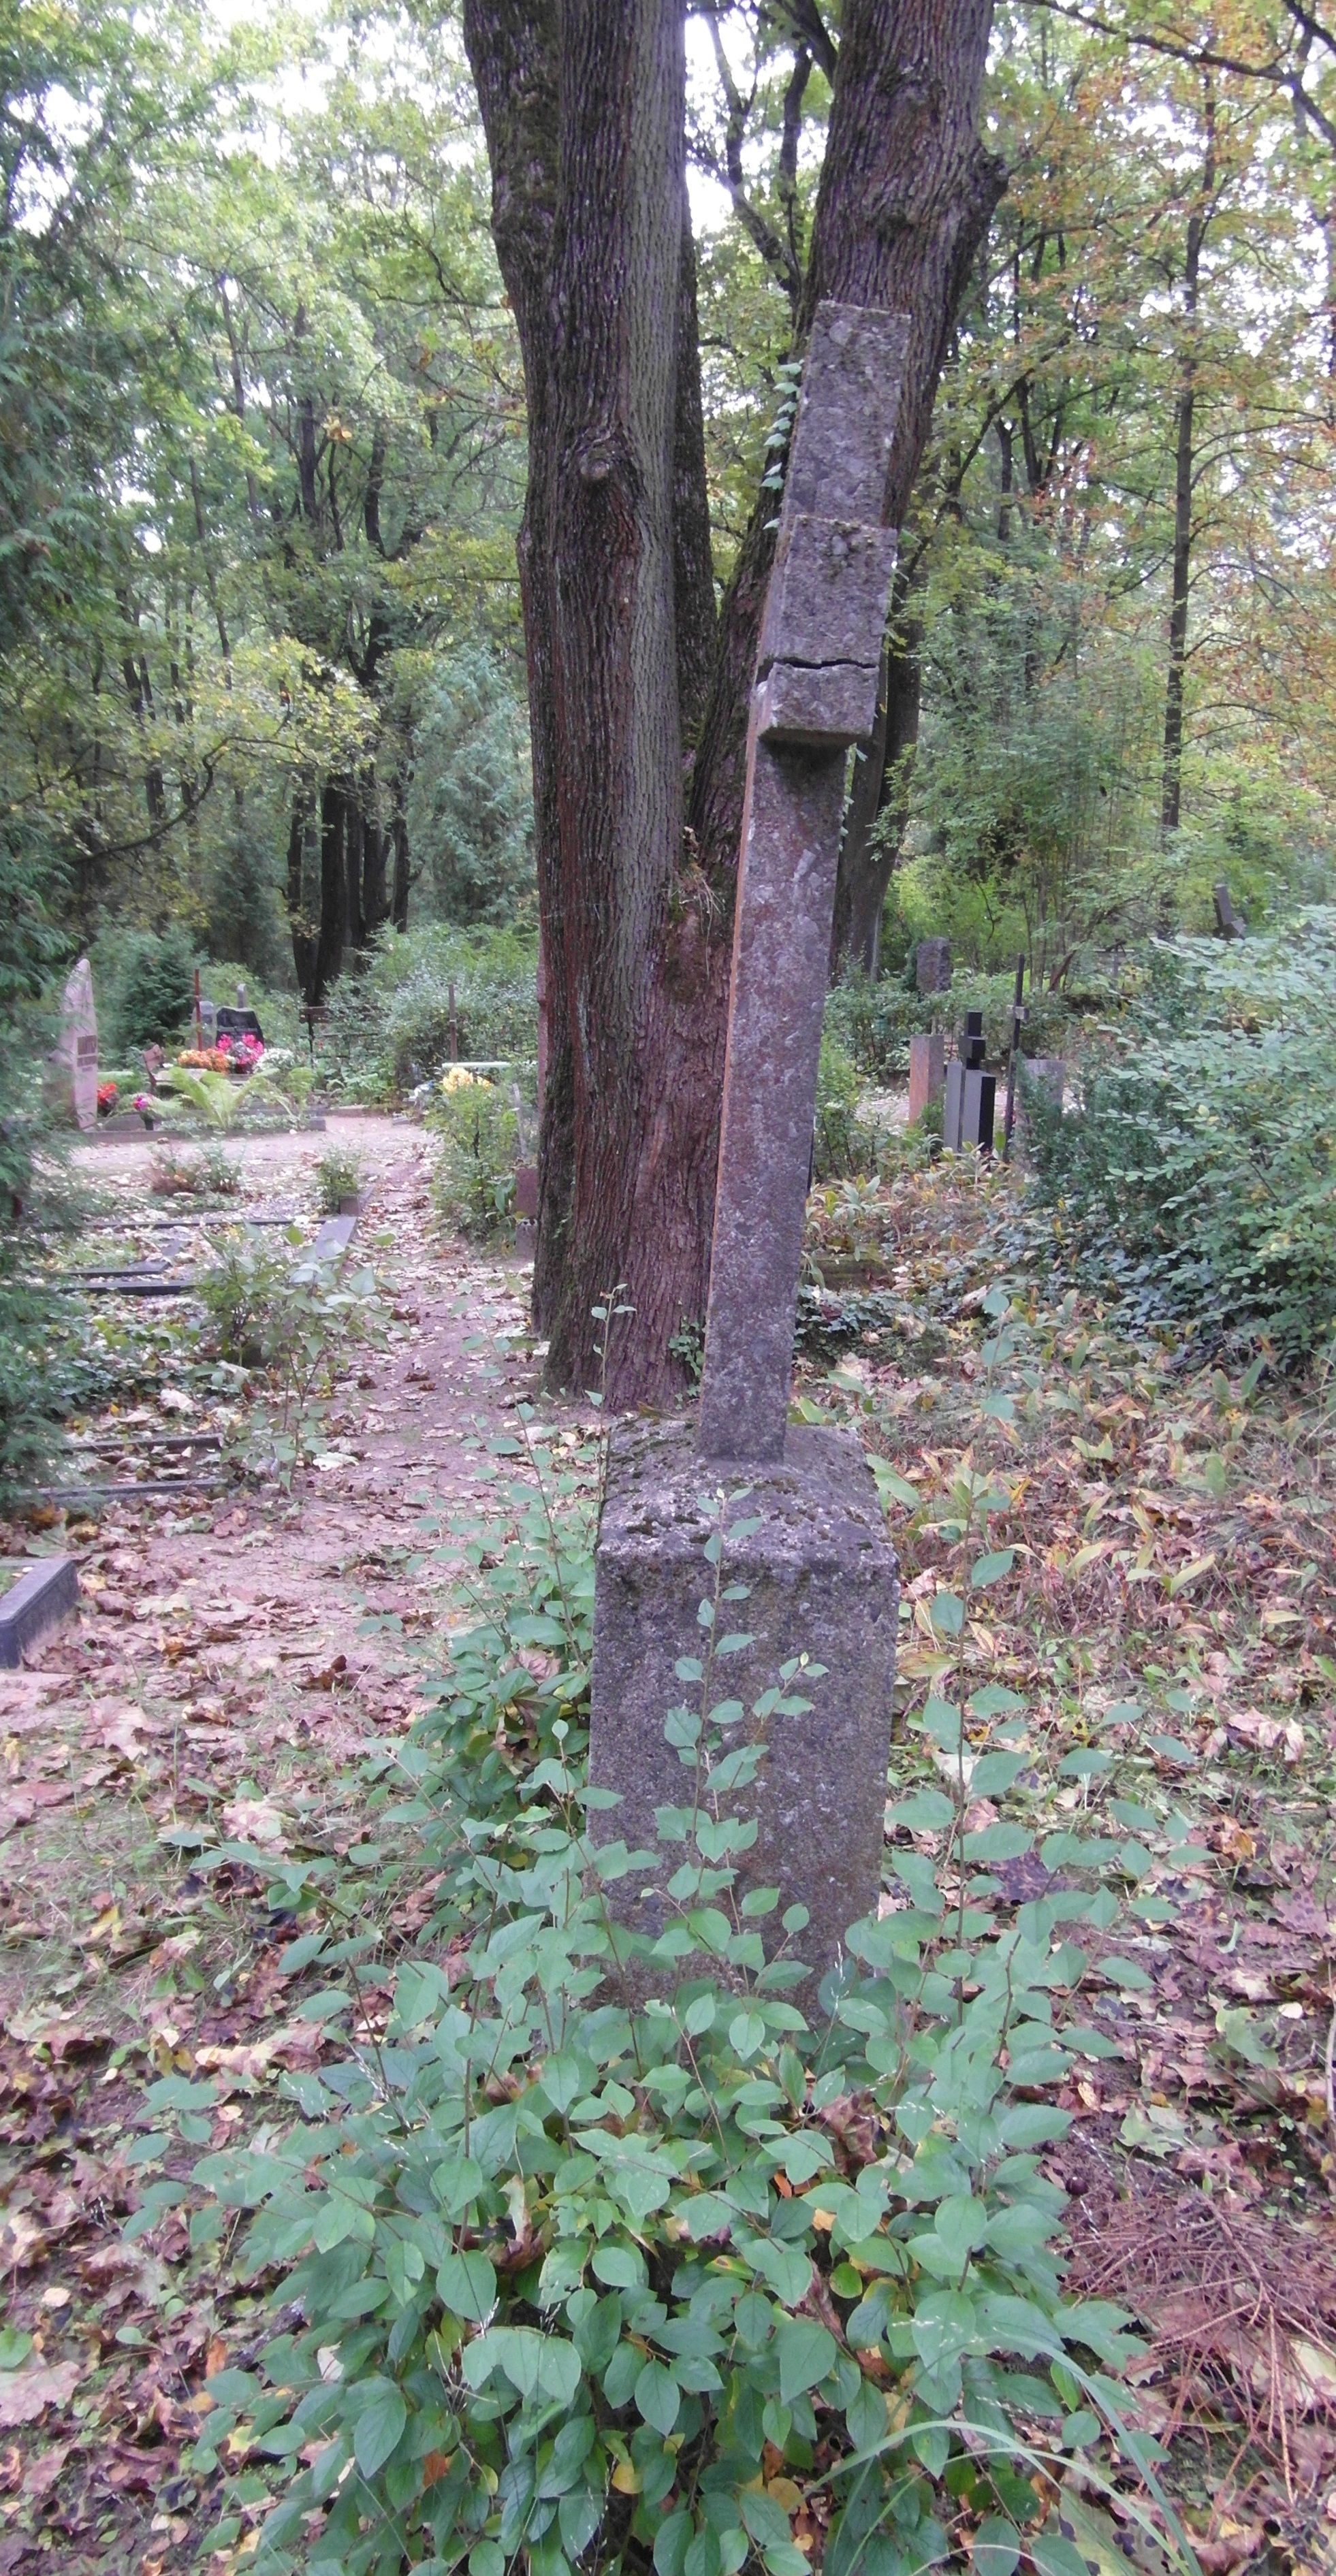 Tombstone of Bolesław, Piotr Bielski, St Michael's cemetery in Riga, as of 2021.